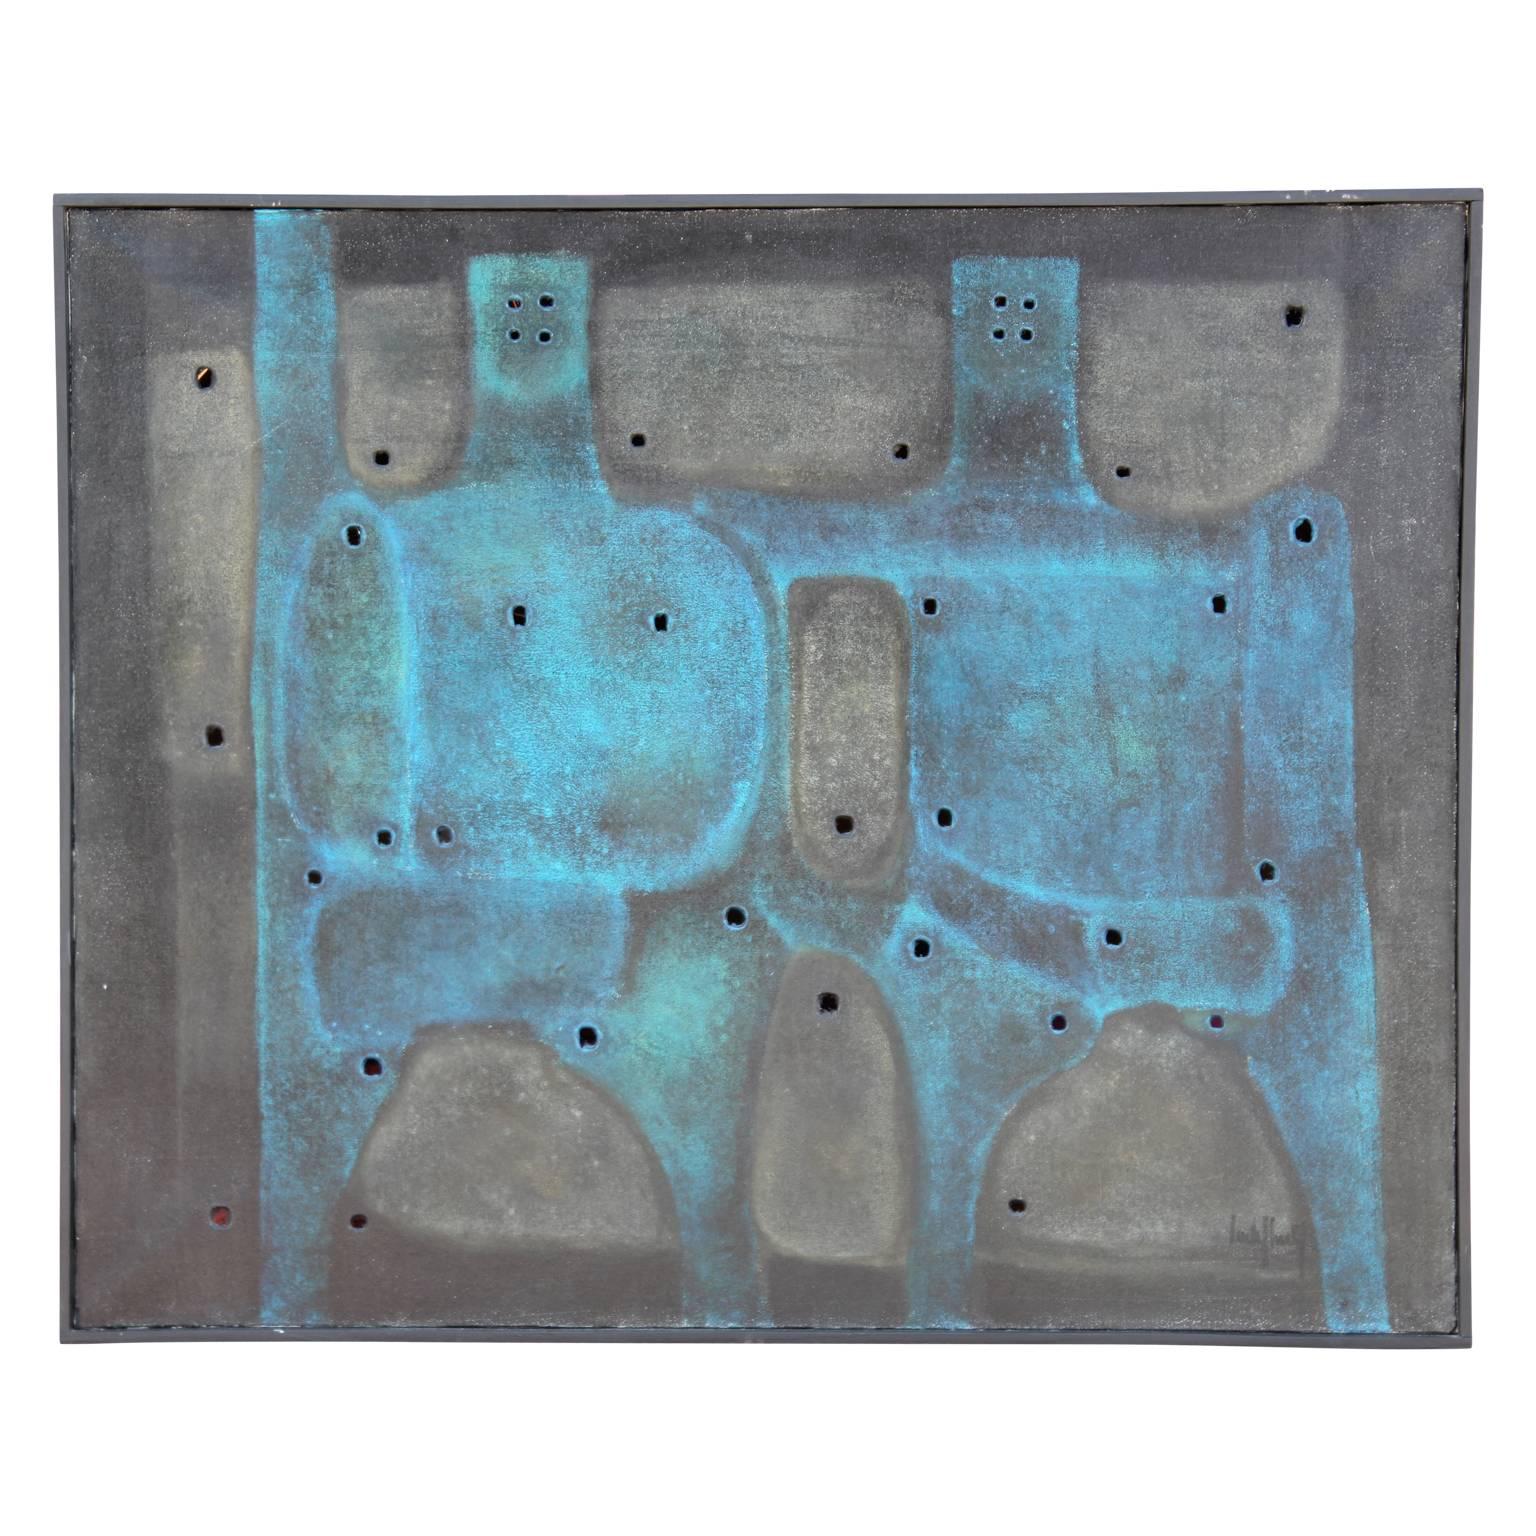 Carlos Planell Abstract Painting – Abstraktes, figuratives Gemälde ""Adalt" mit zwei abstrakten Figuren